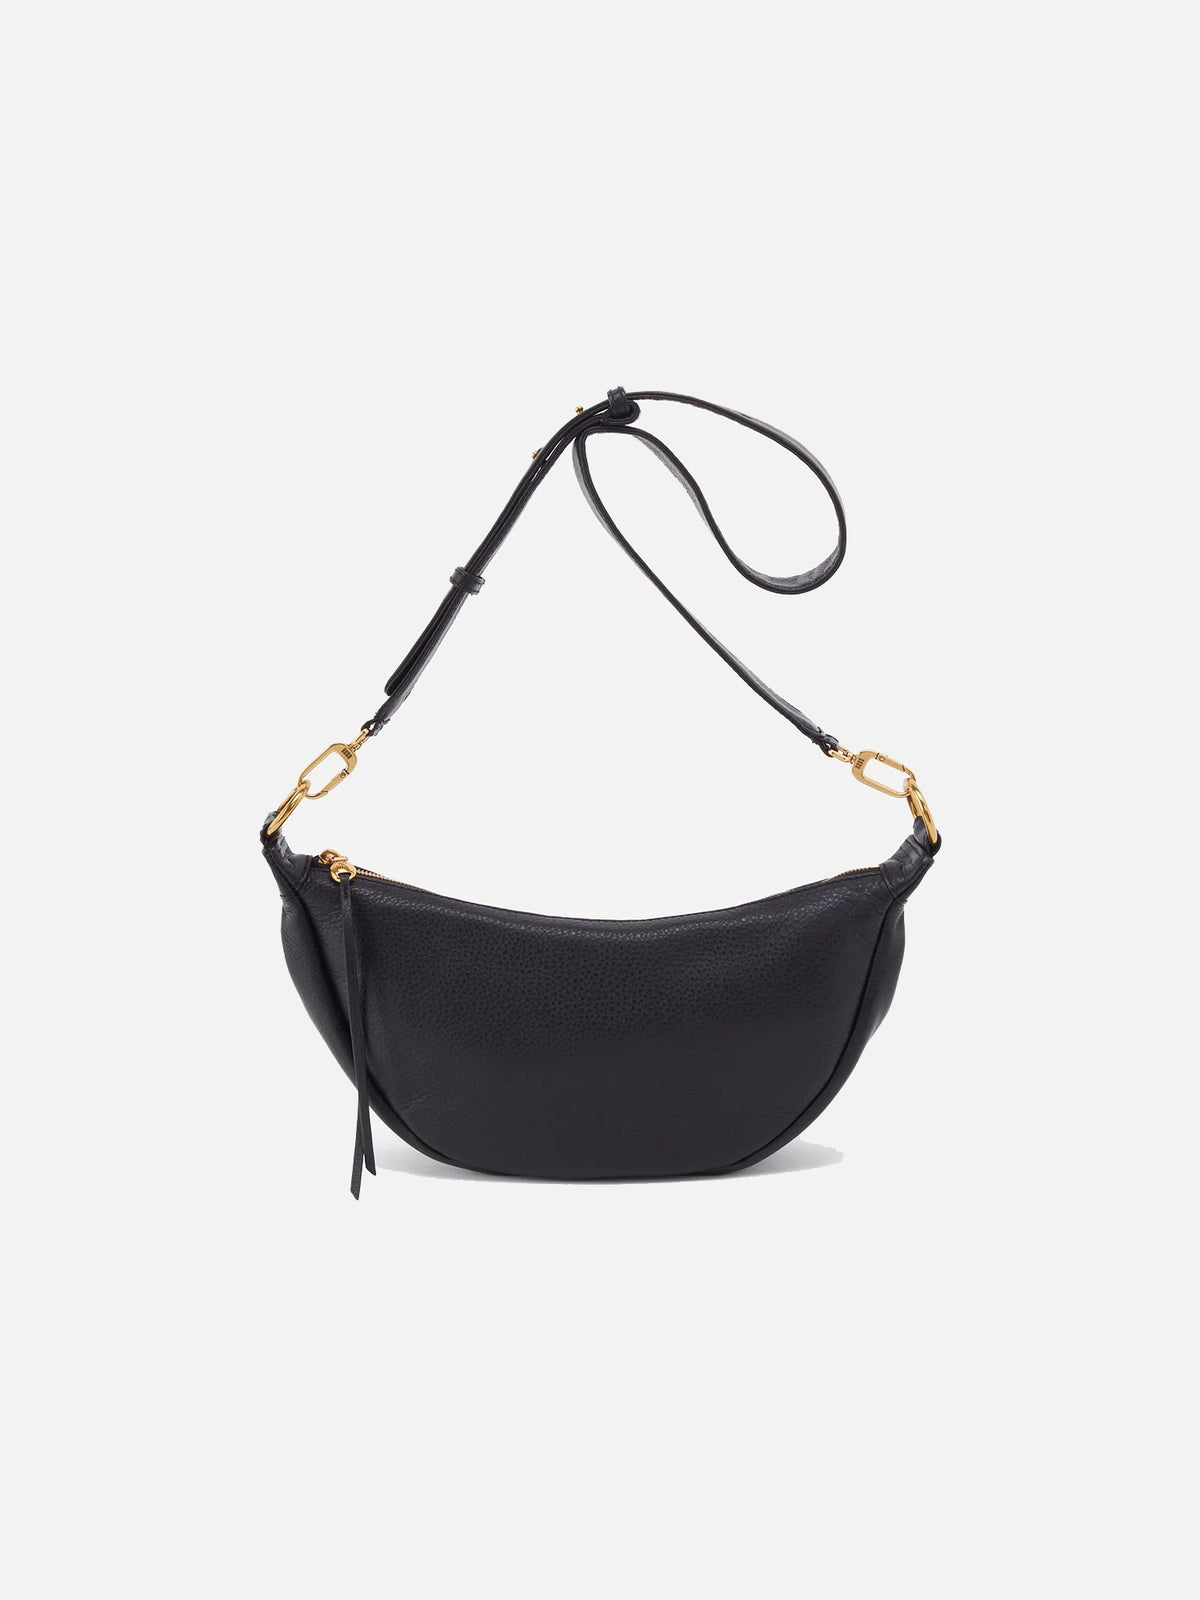 hobo knox sling bag in black pebbled leather